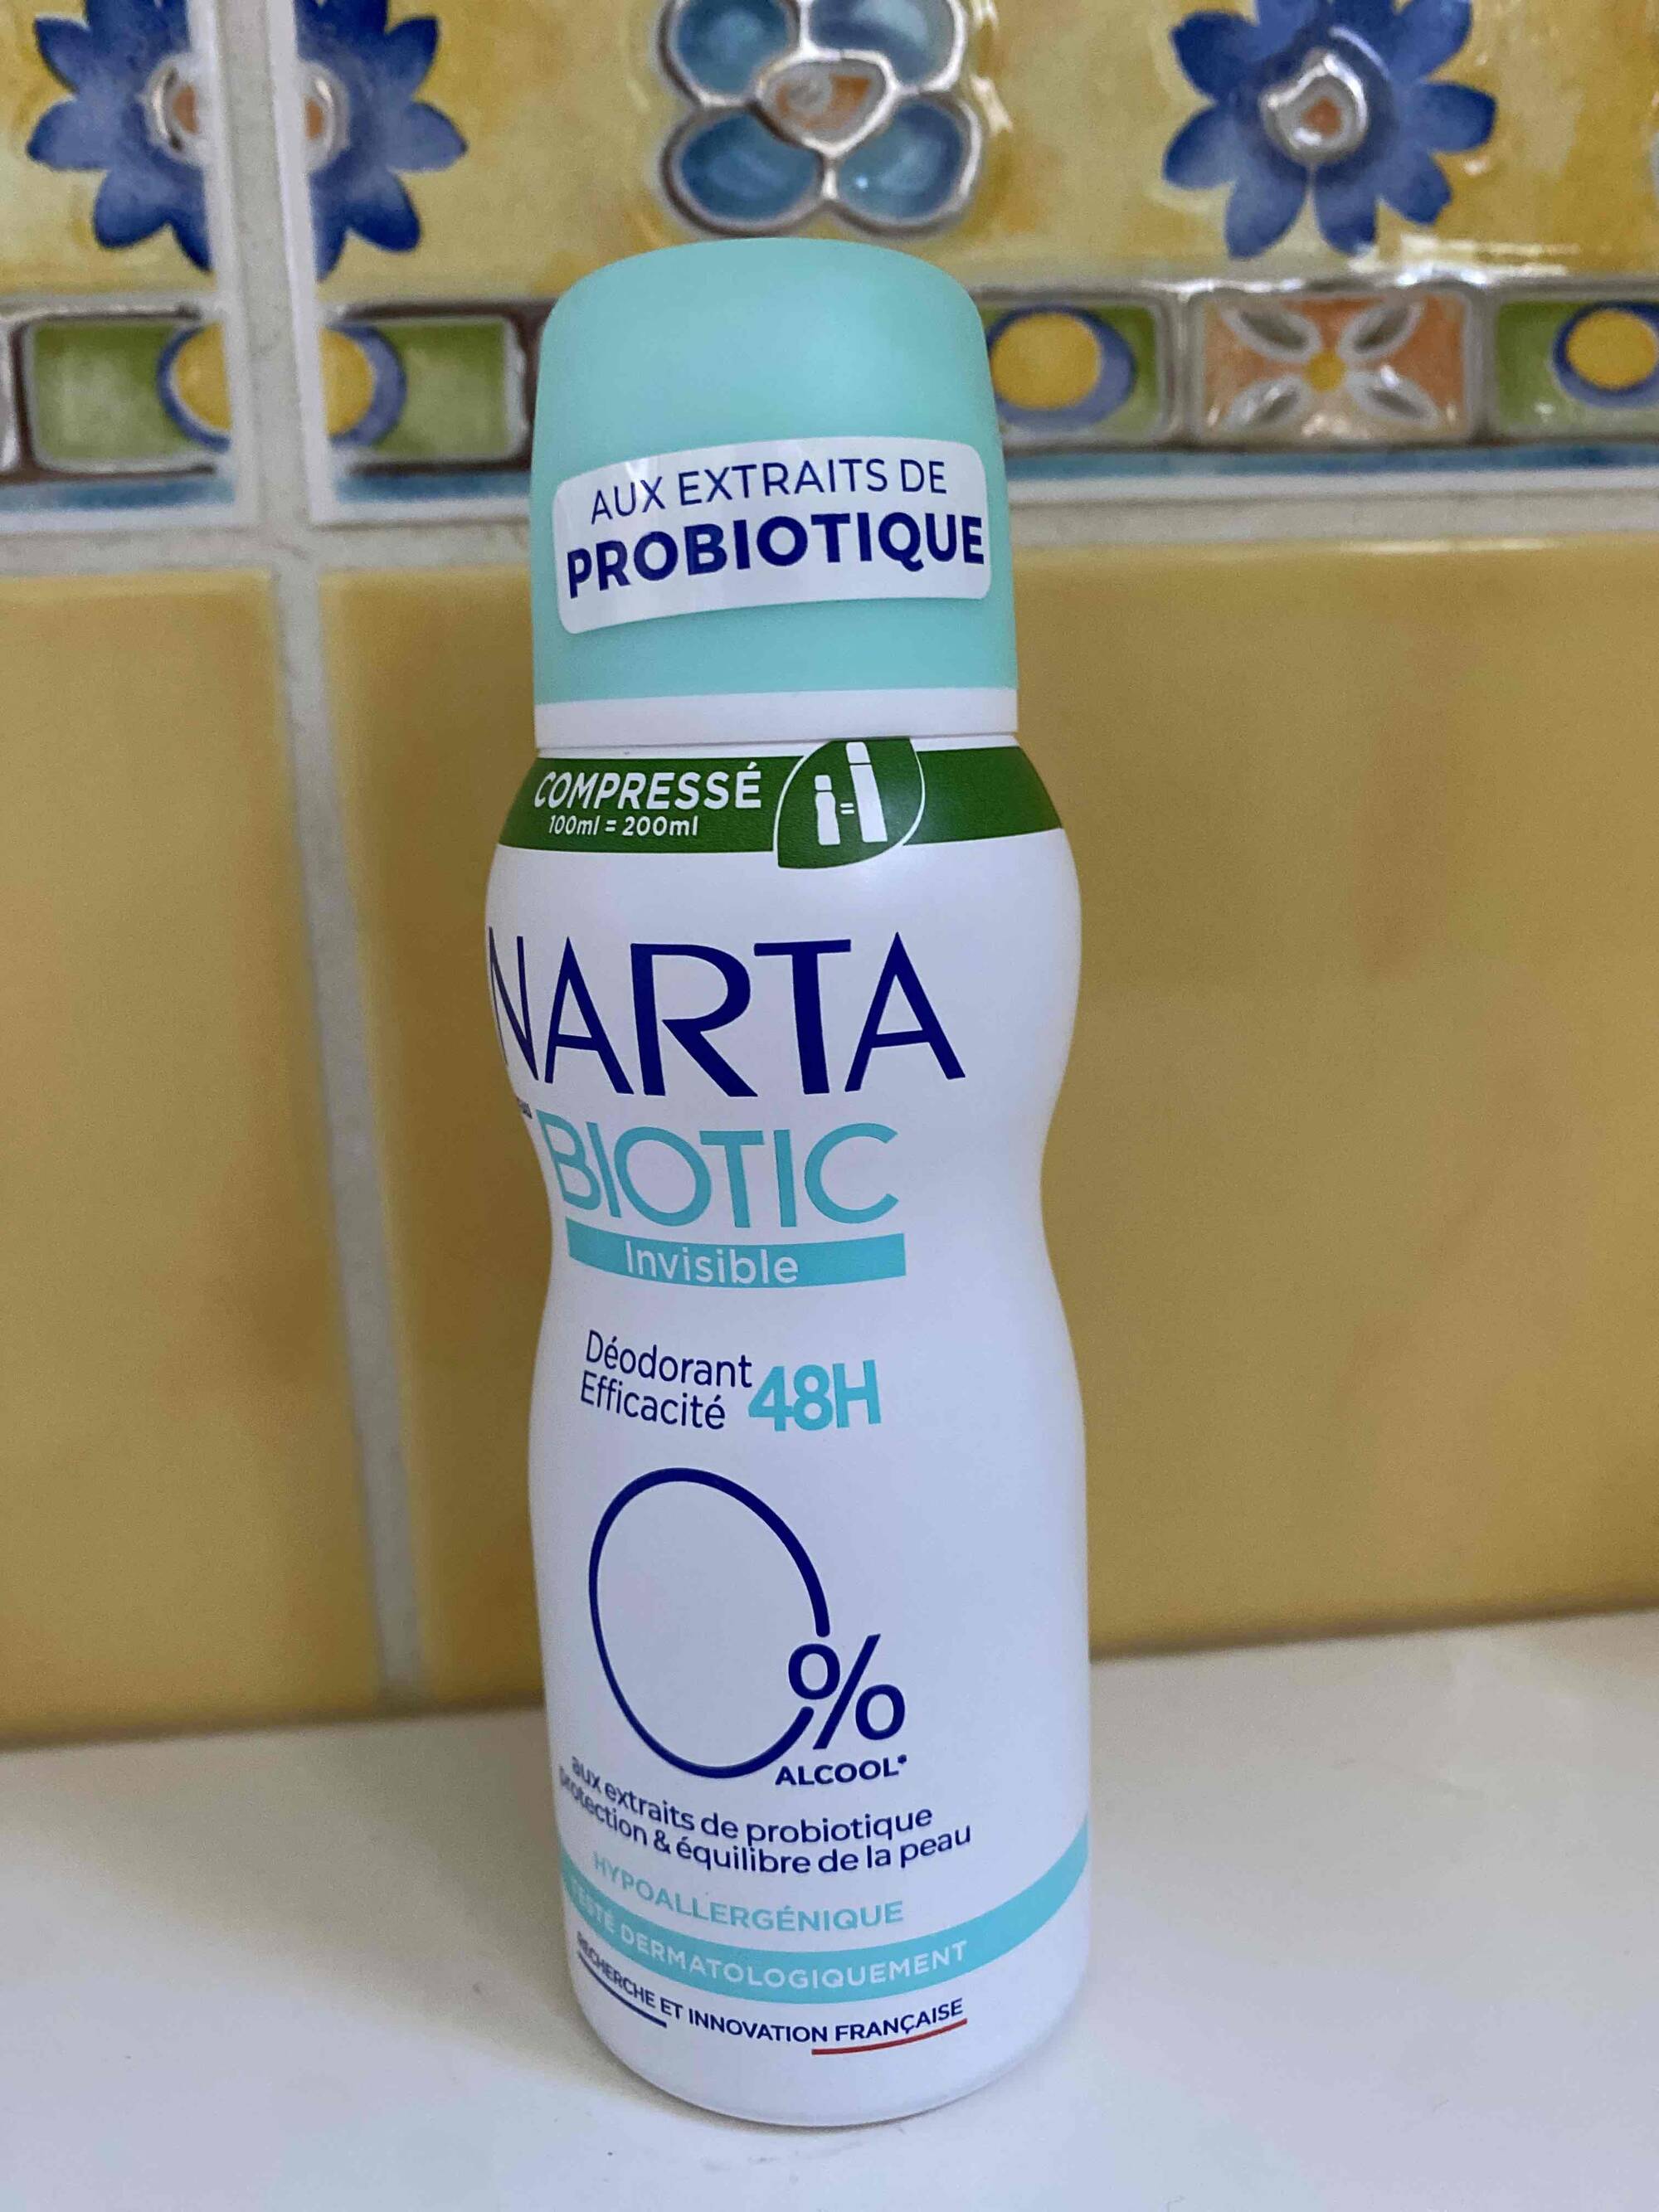 NARTA - Biotic - Déodorant efficacité 48h